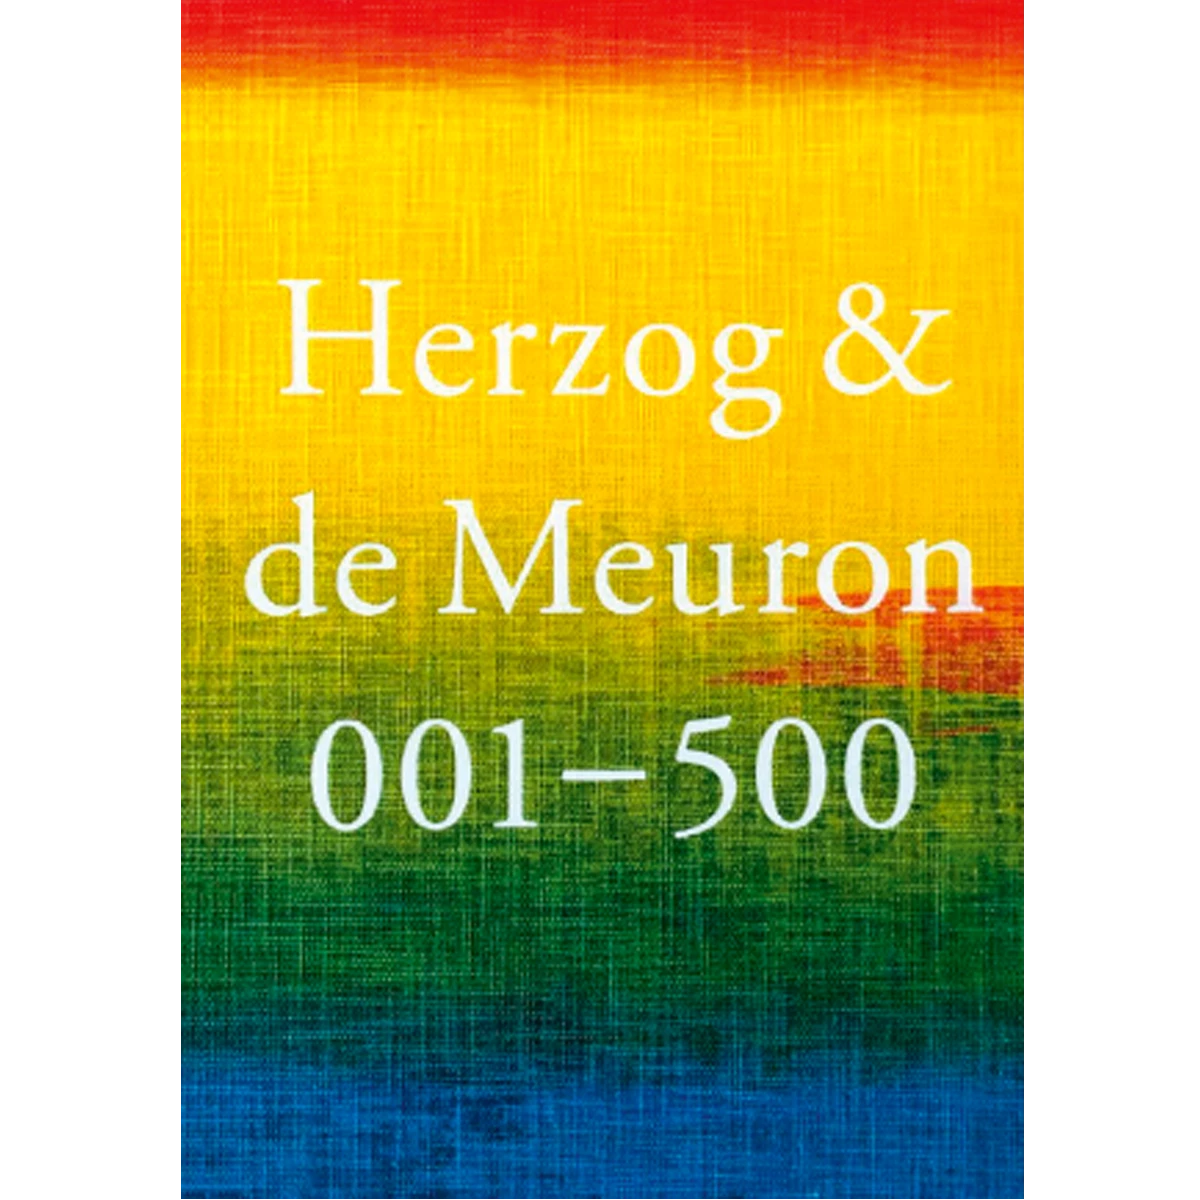 Herzog & de Meuron, 001-500 - Dino Simonett | Arquitectura Viva